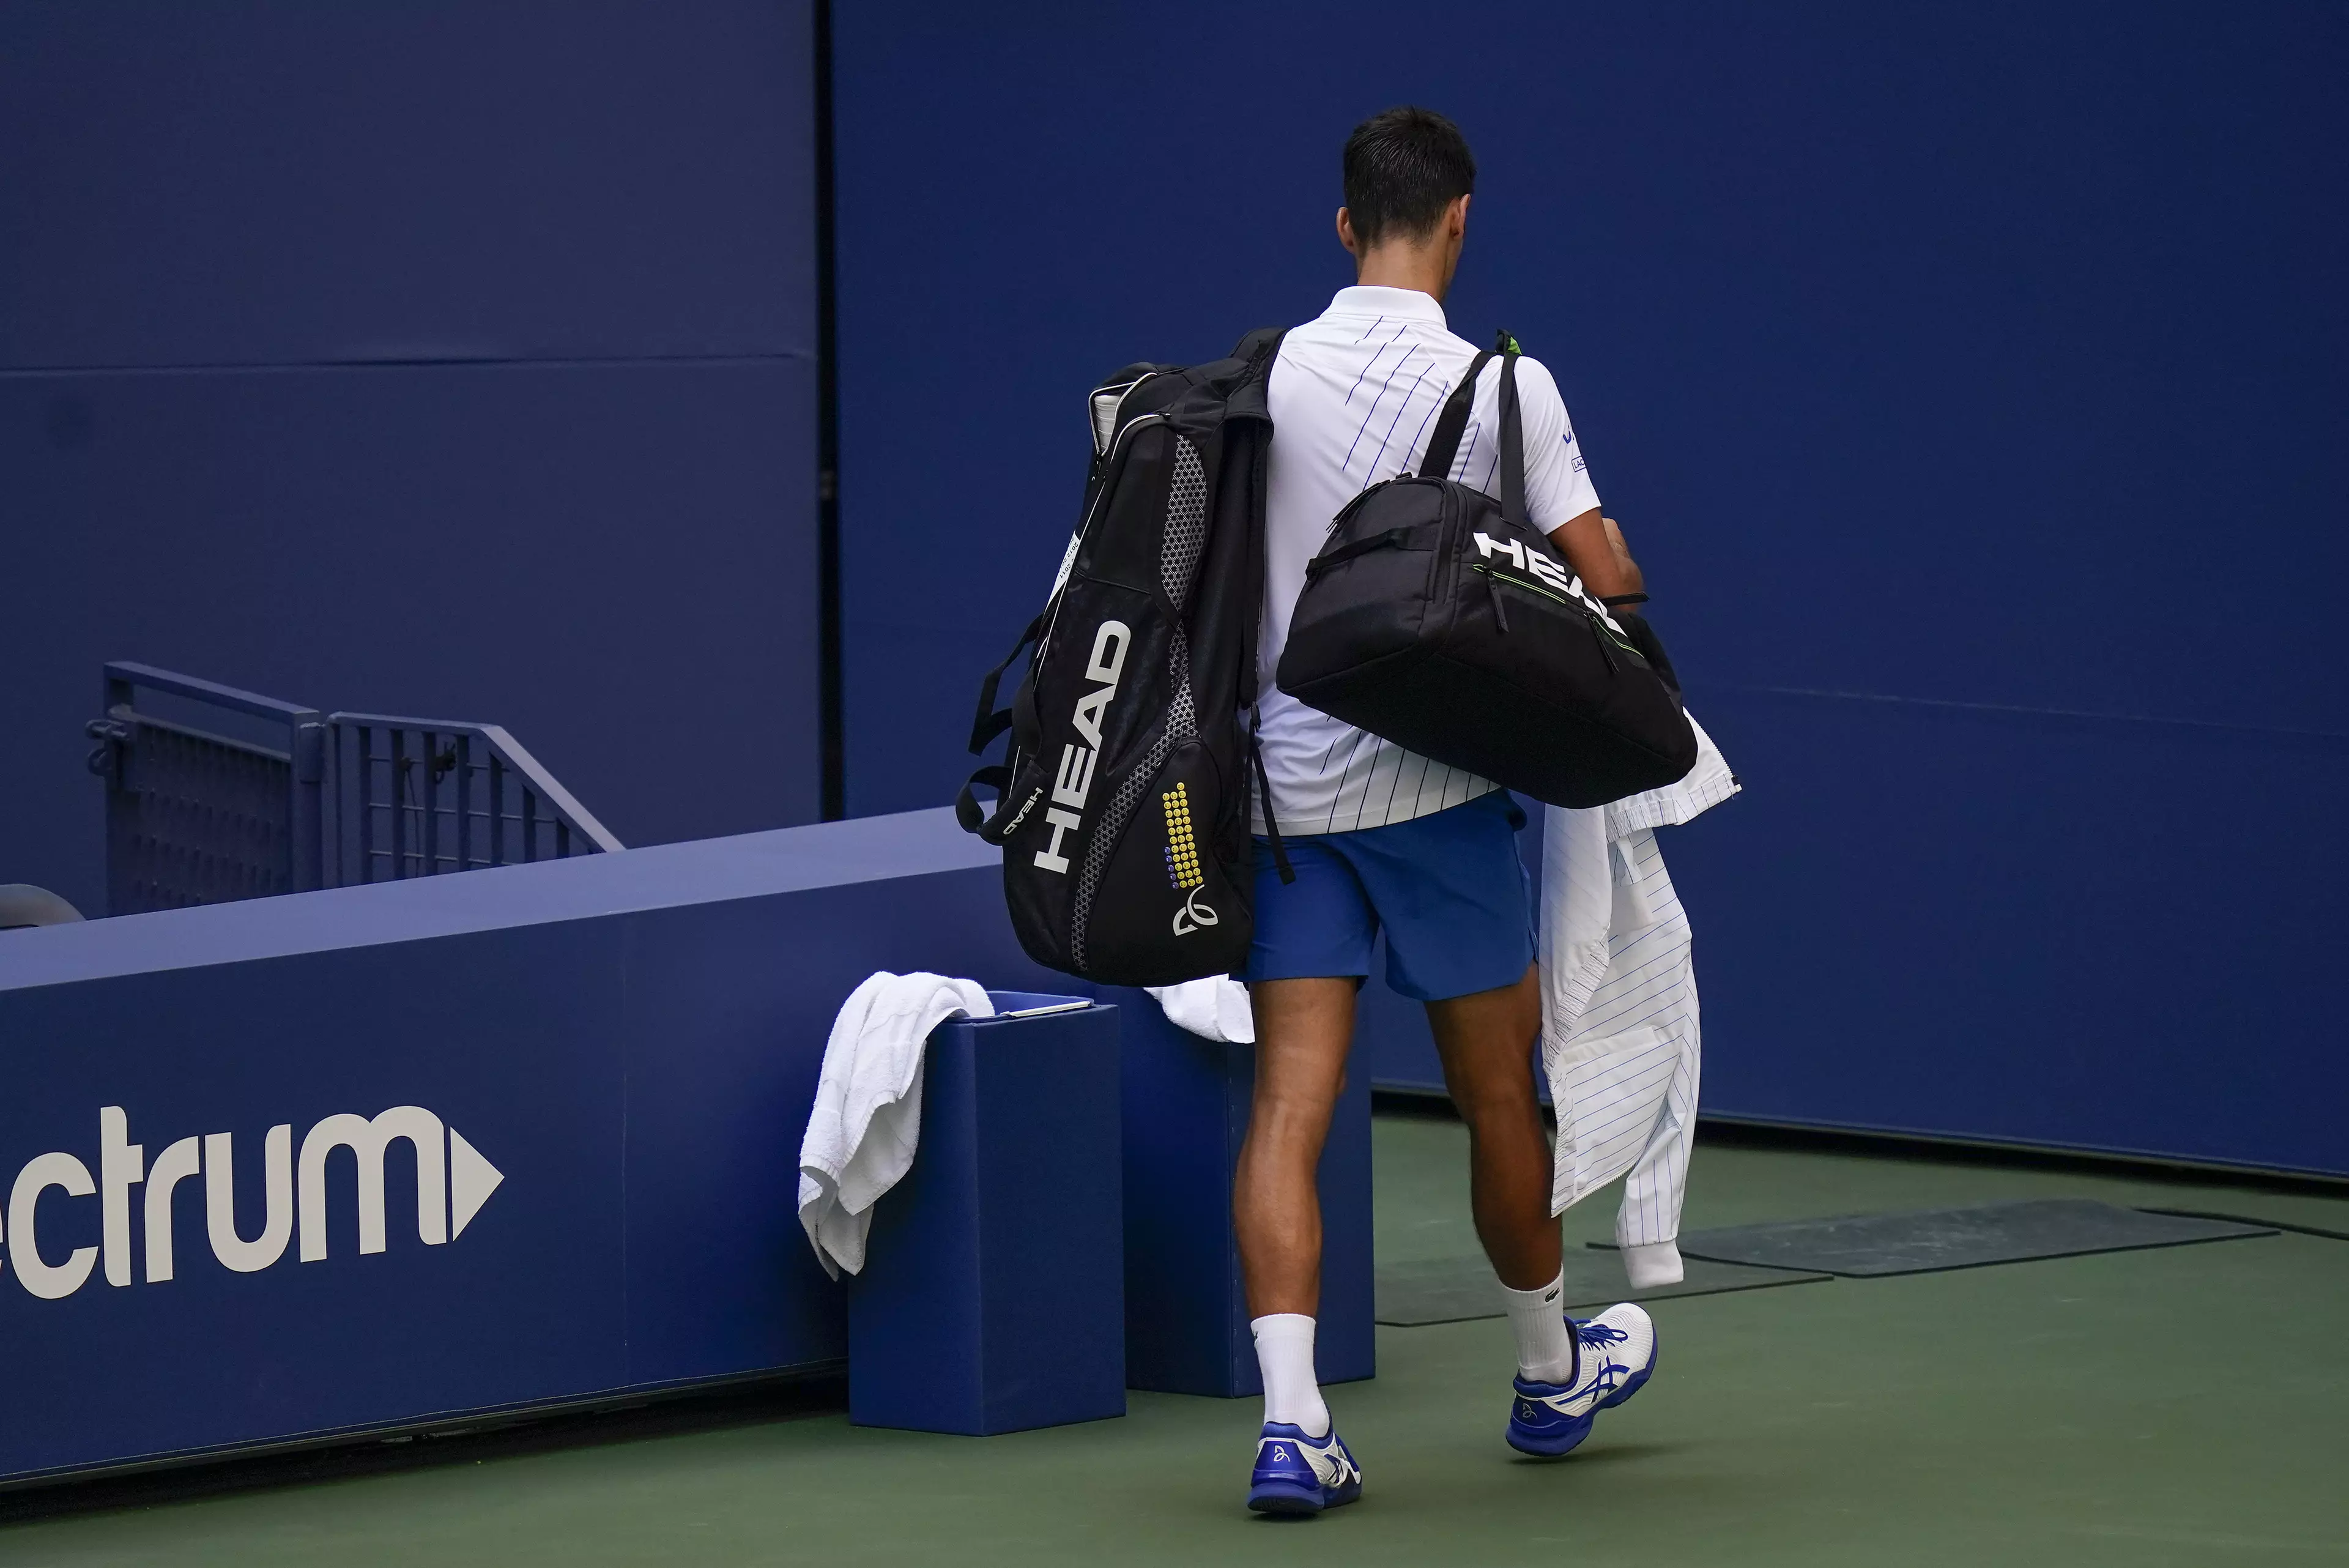 Novak Djokovic leaves the court after sensationally defaulting the match.